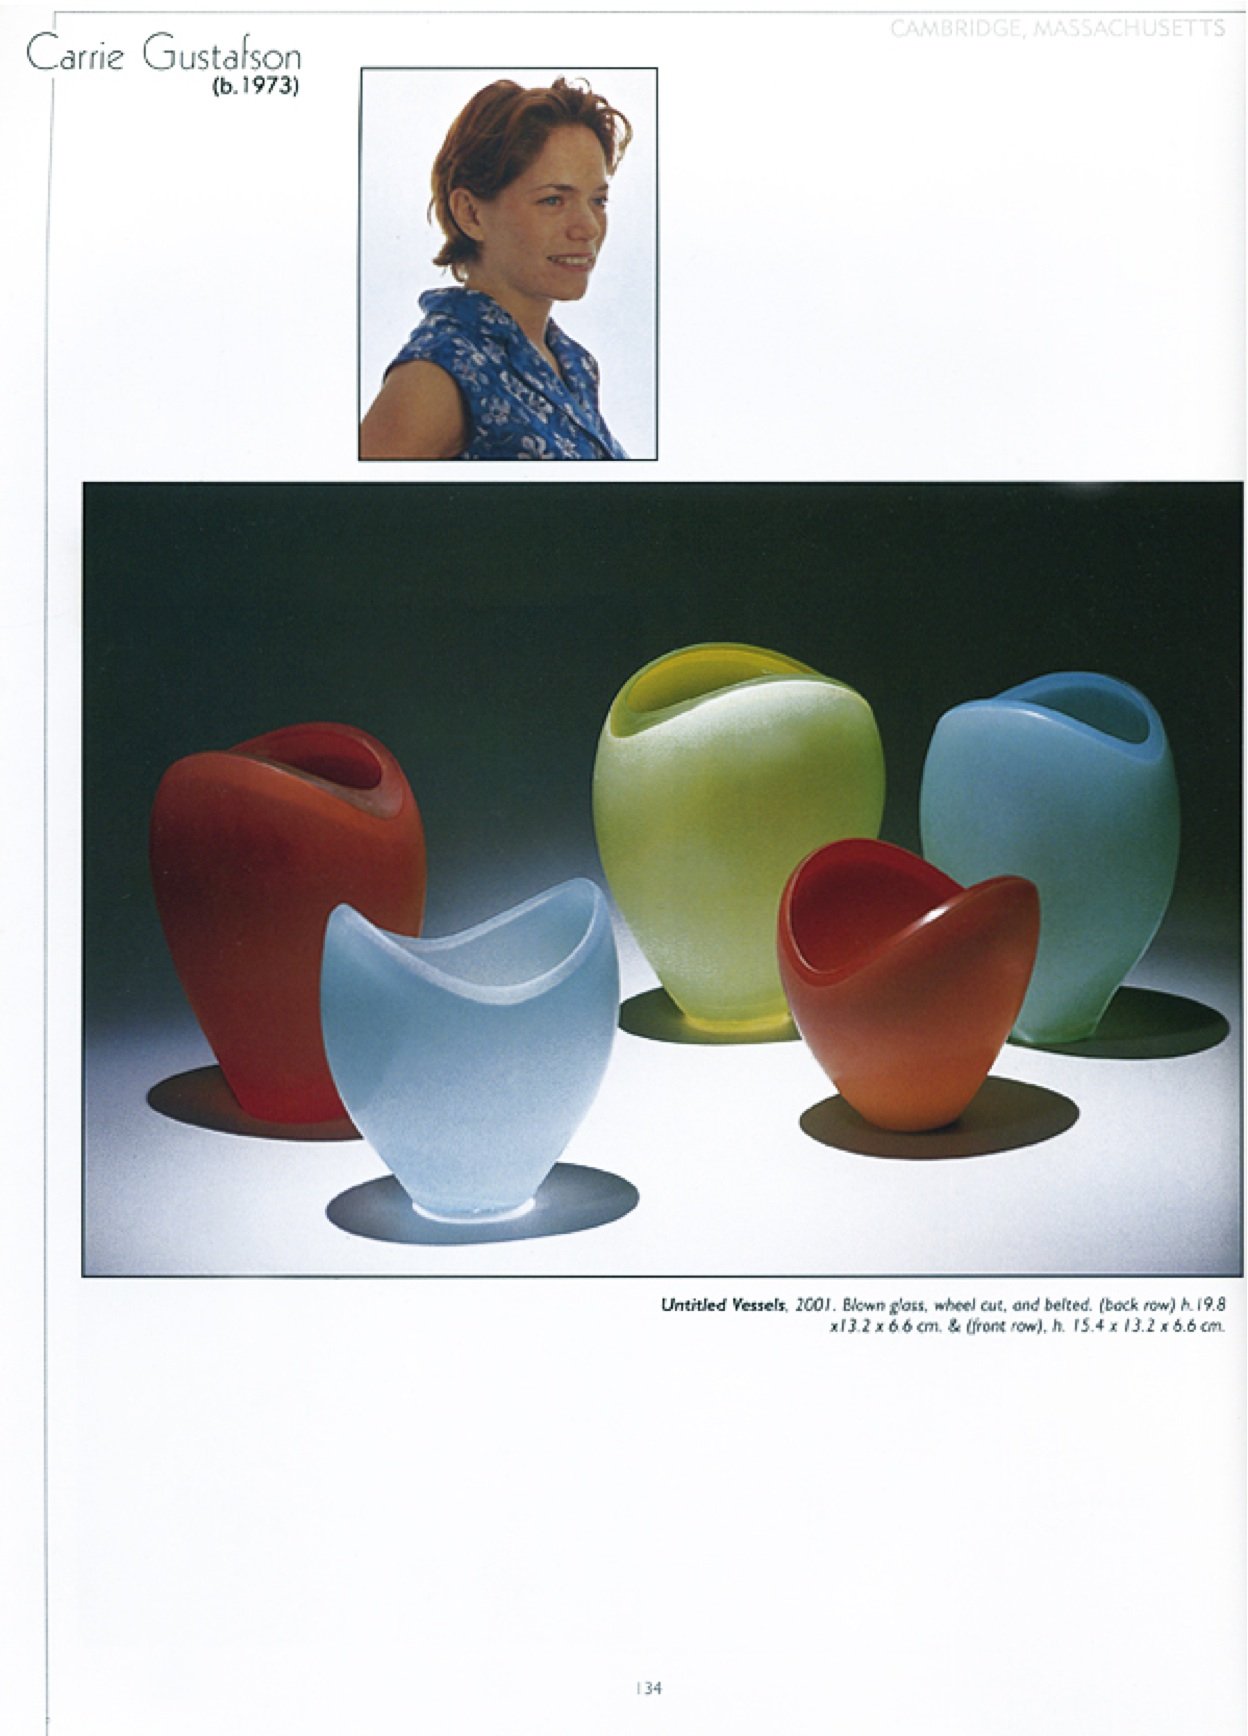 Carrie Gustafson featured in the book International Glass Art